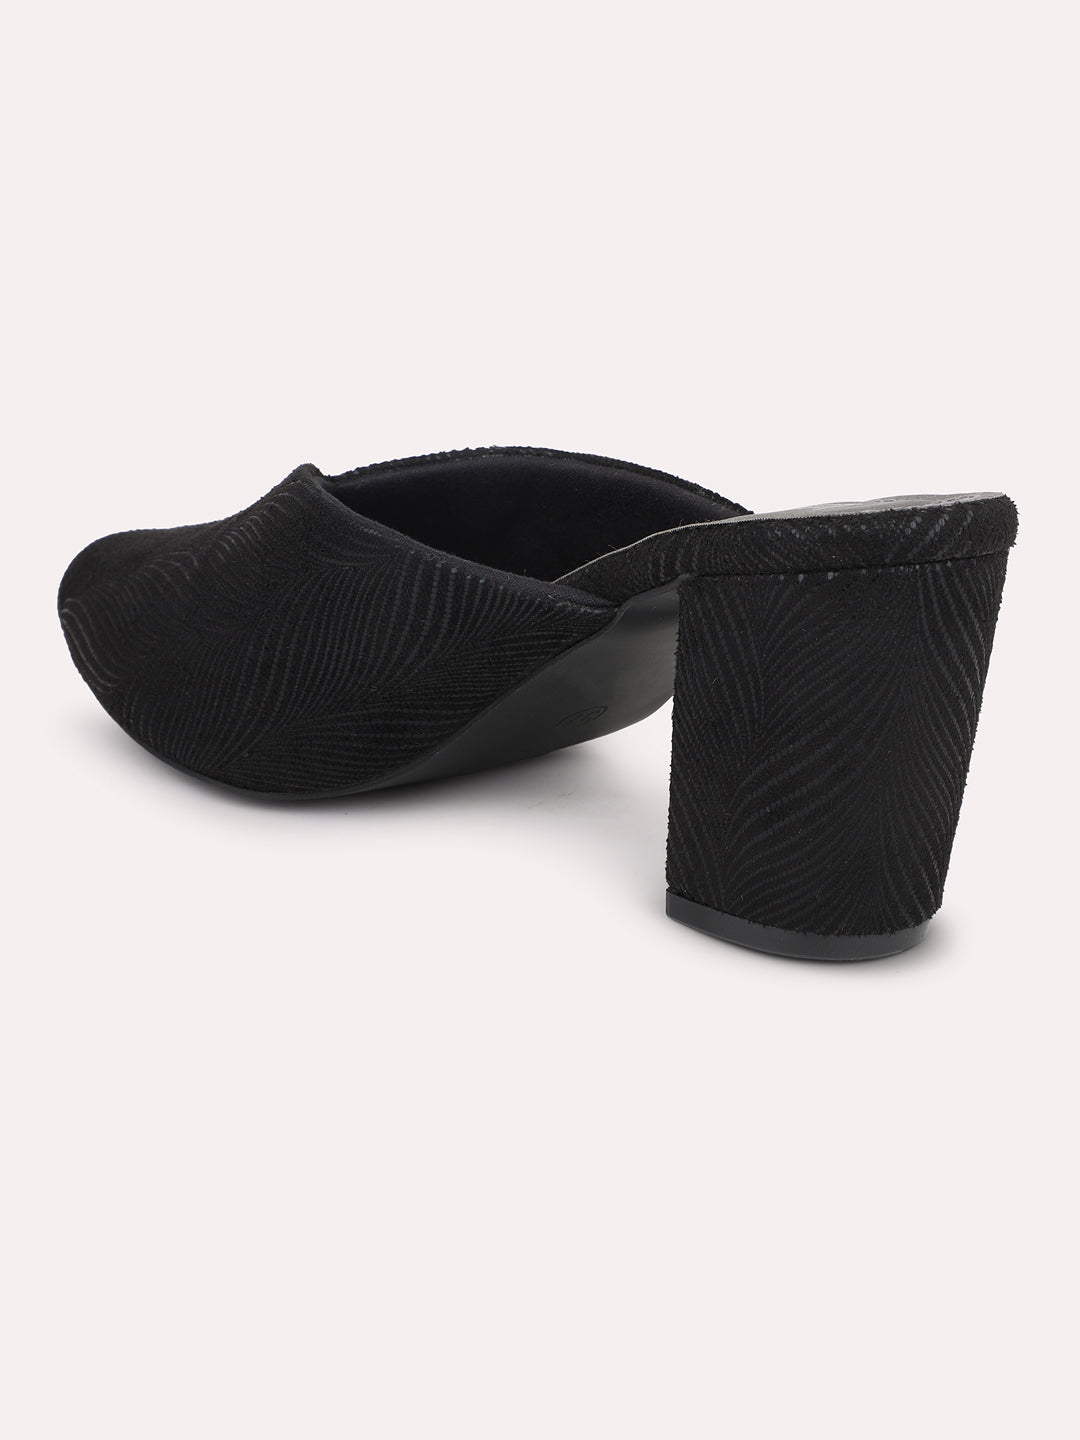 Women Black Embellished Block Mules Heels